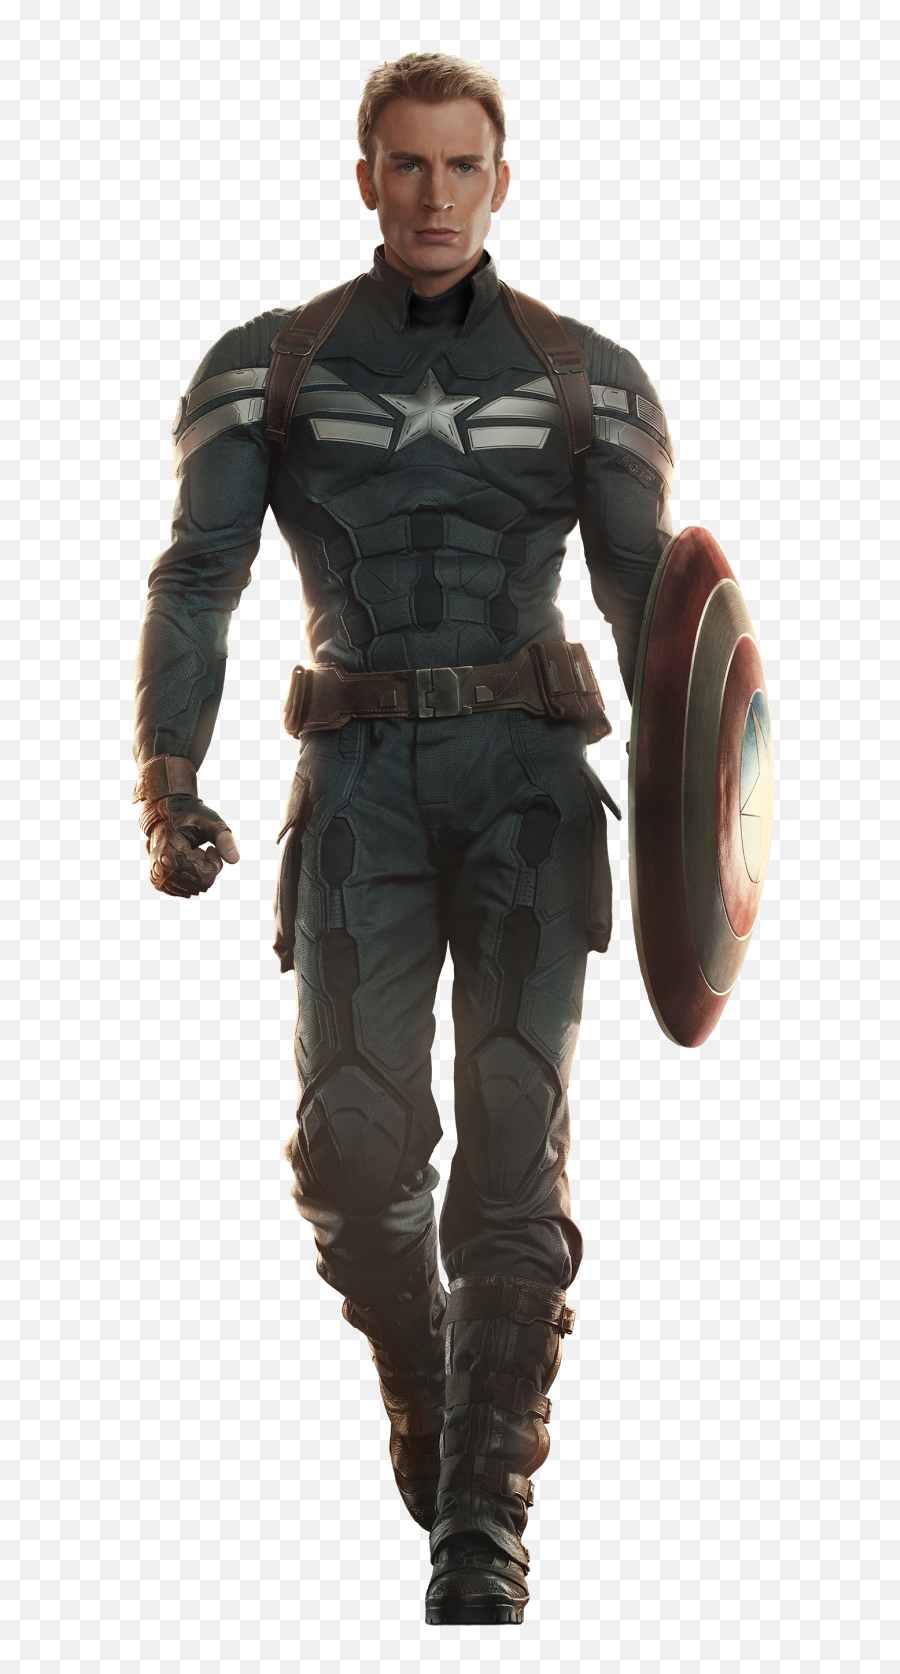 Captain America Png Image Transparent - Winter Soldier Chris Evans Captain America,Captain America Transparent Background